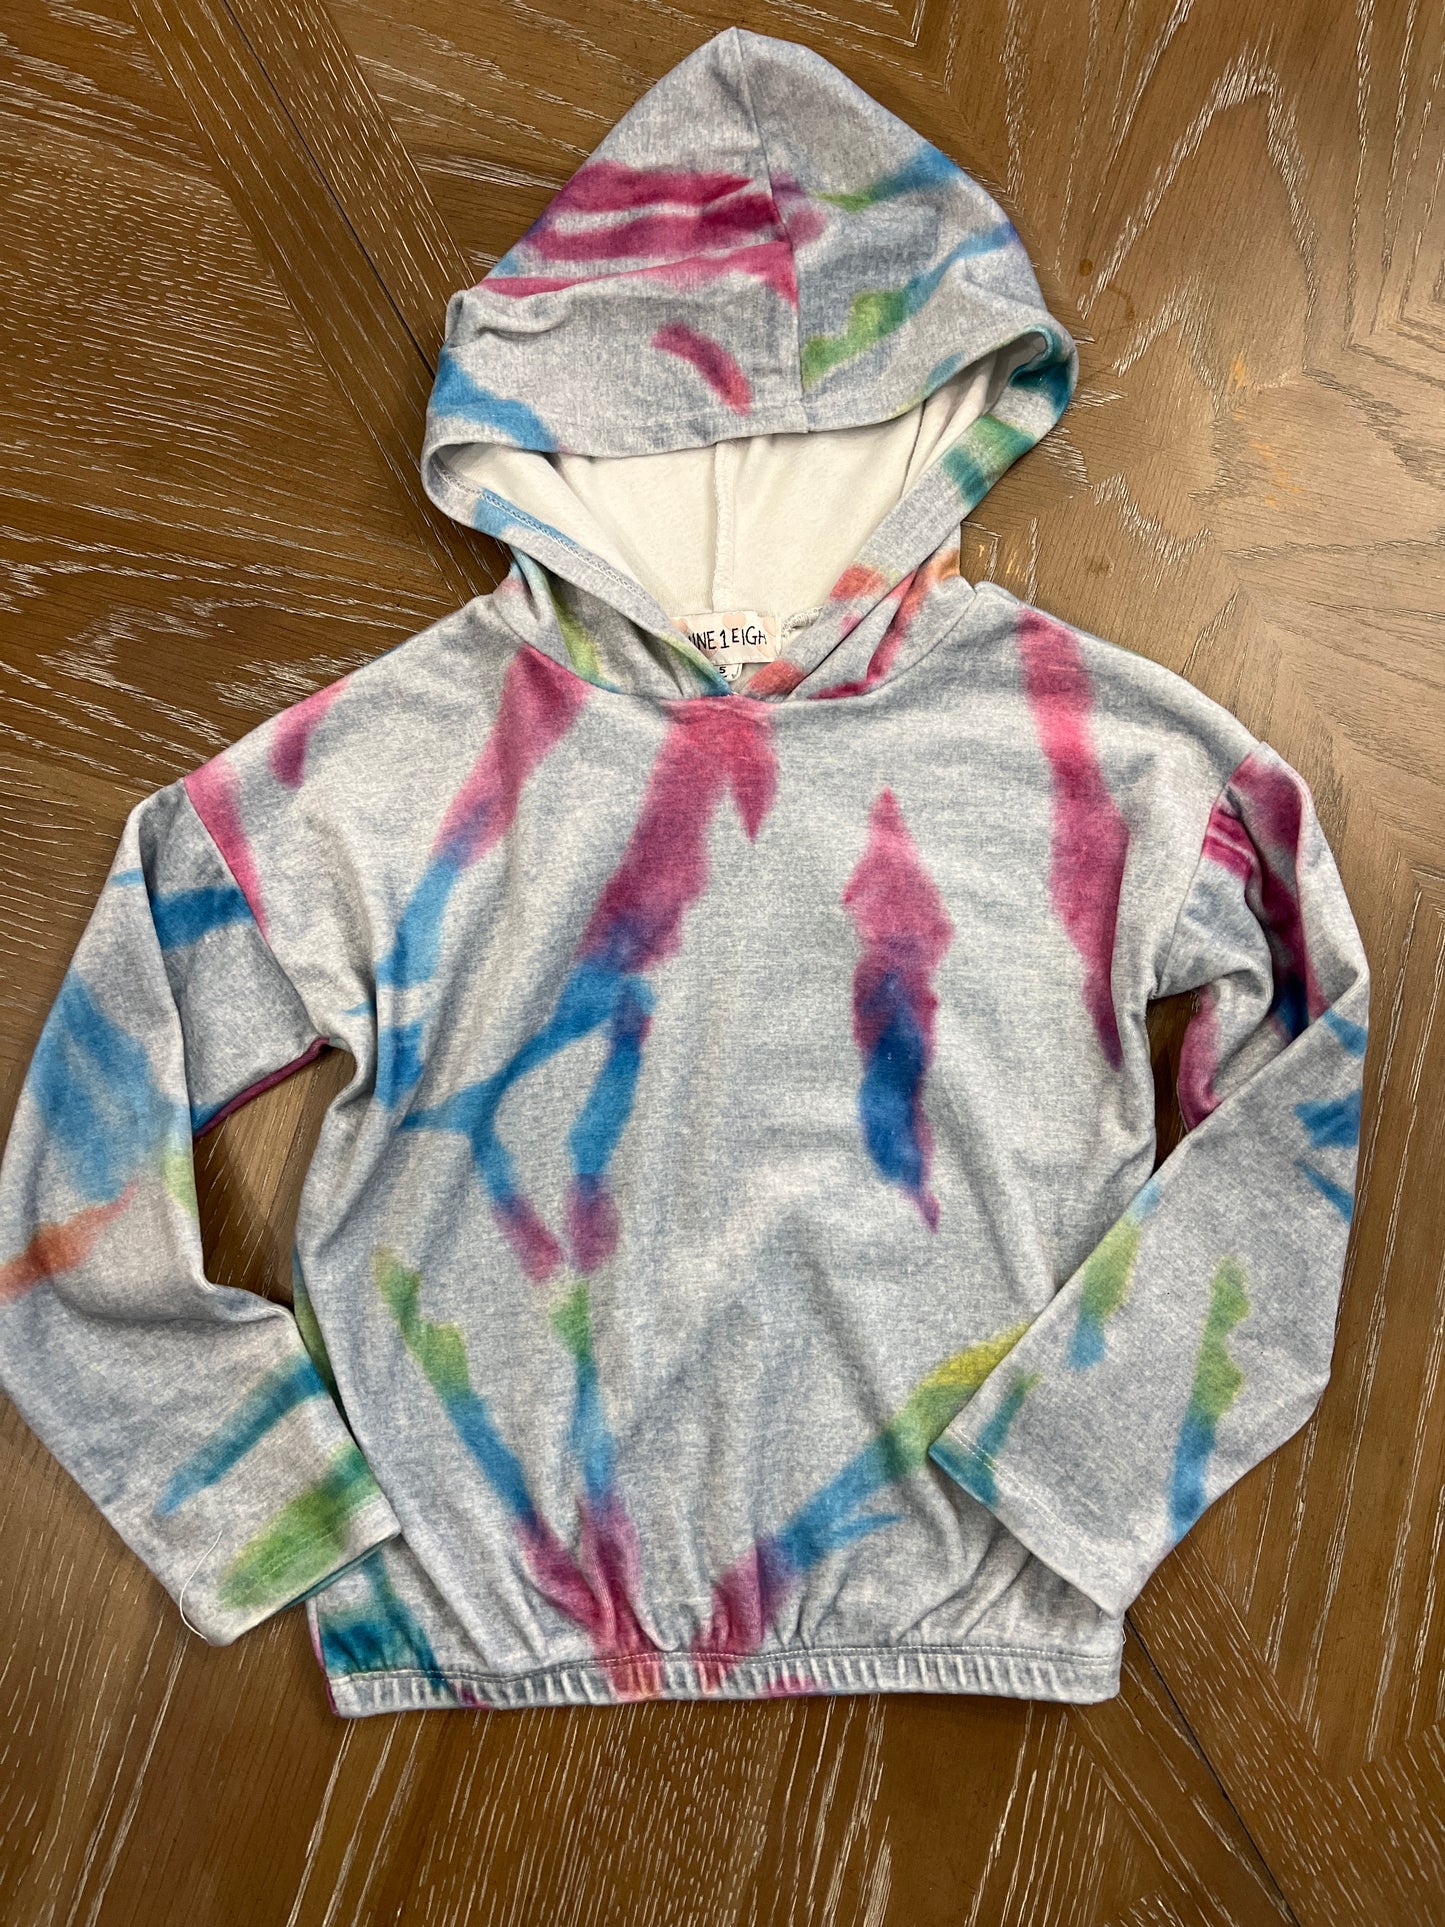 Nine 1 Eight size 5 tie dye soft lightweight thin hoodie